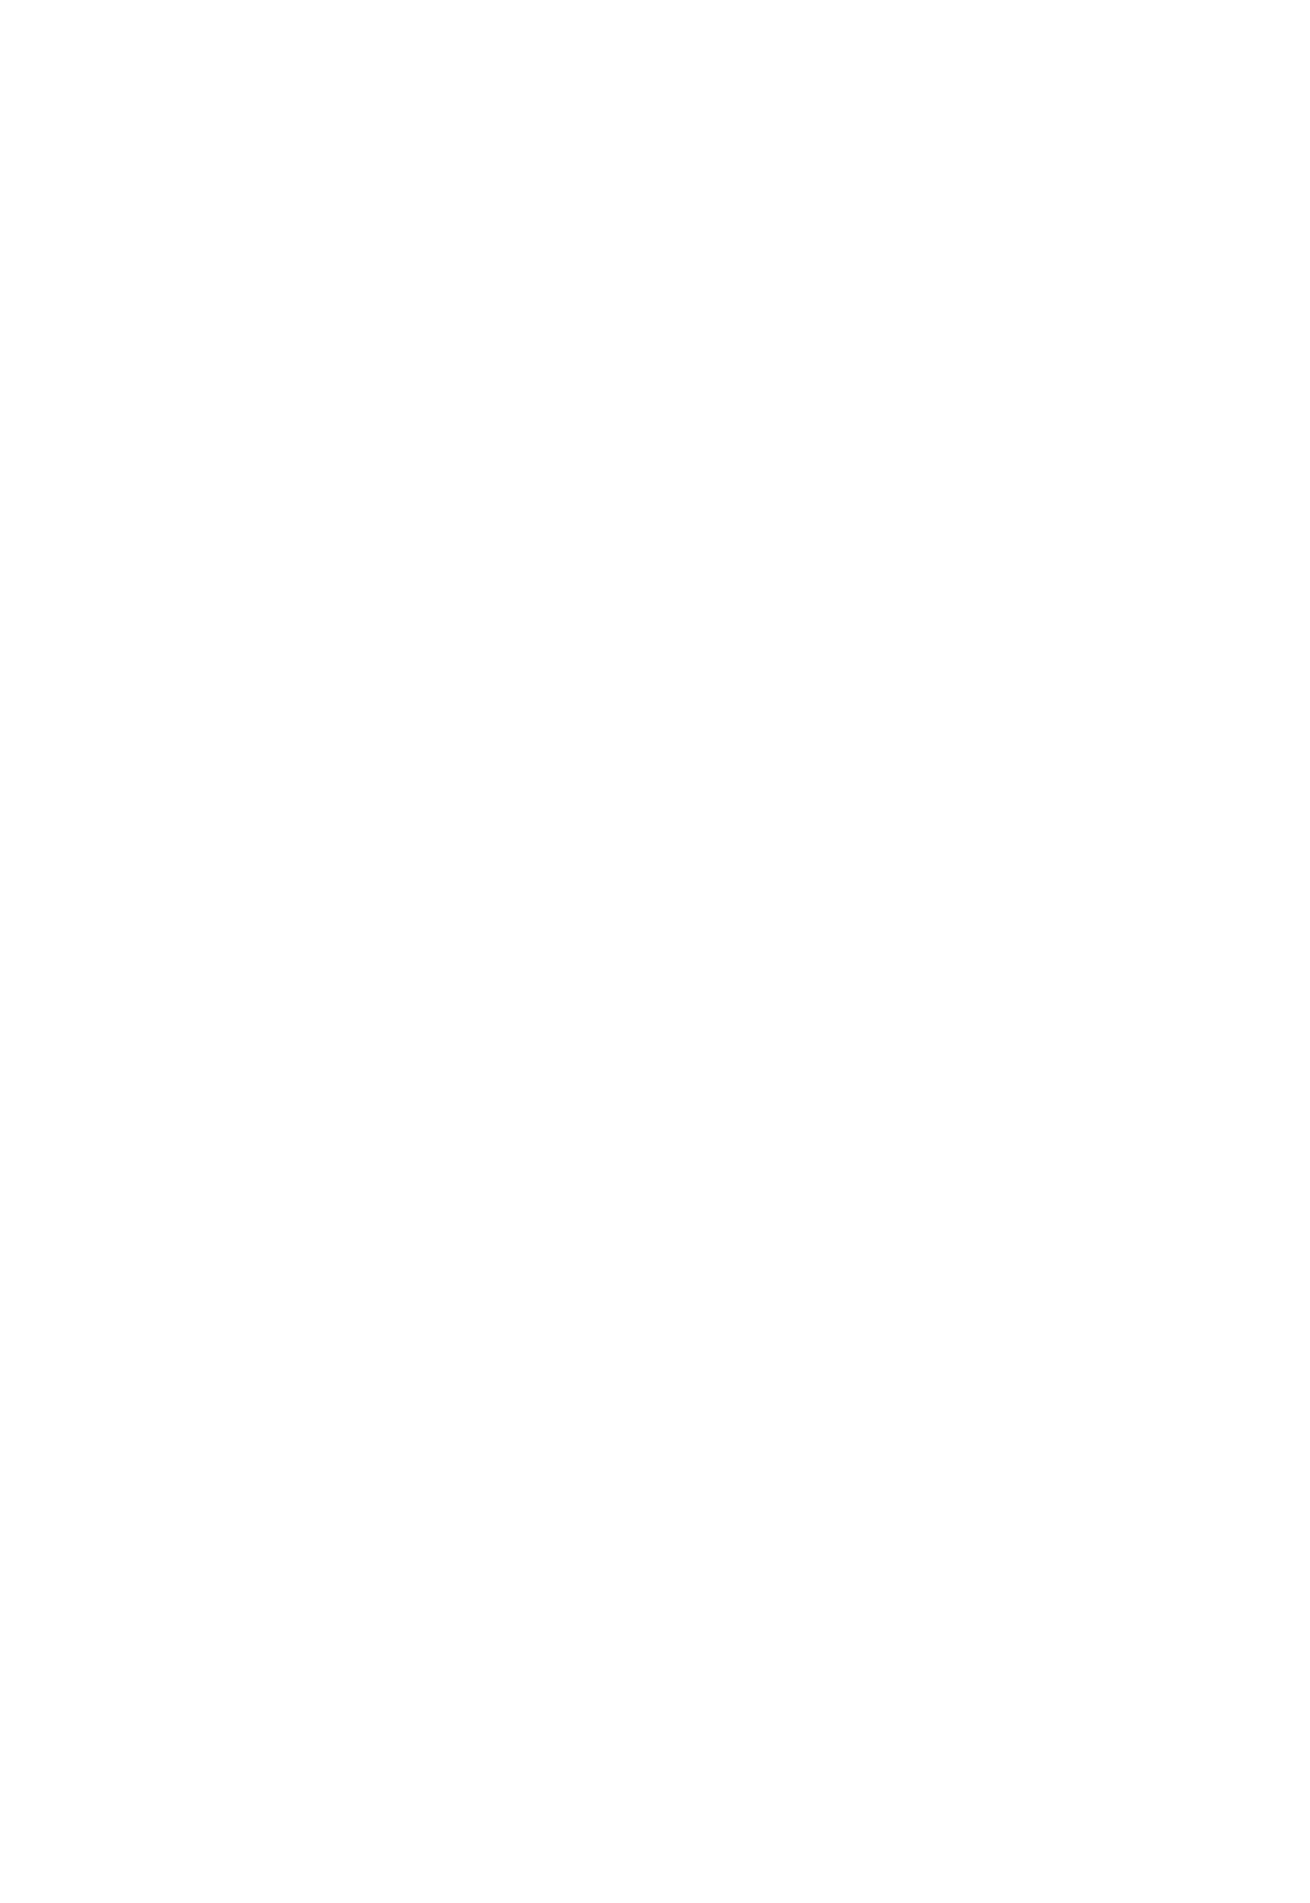 Queen's Award for Enterprise 2020 - Innovation